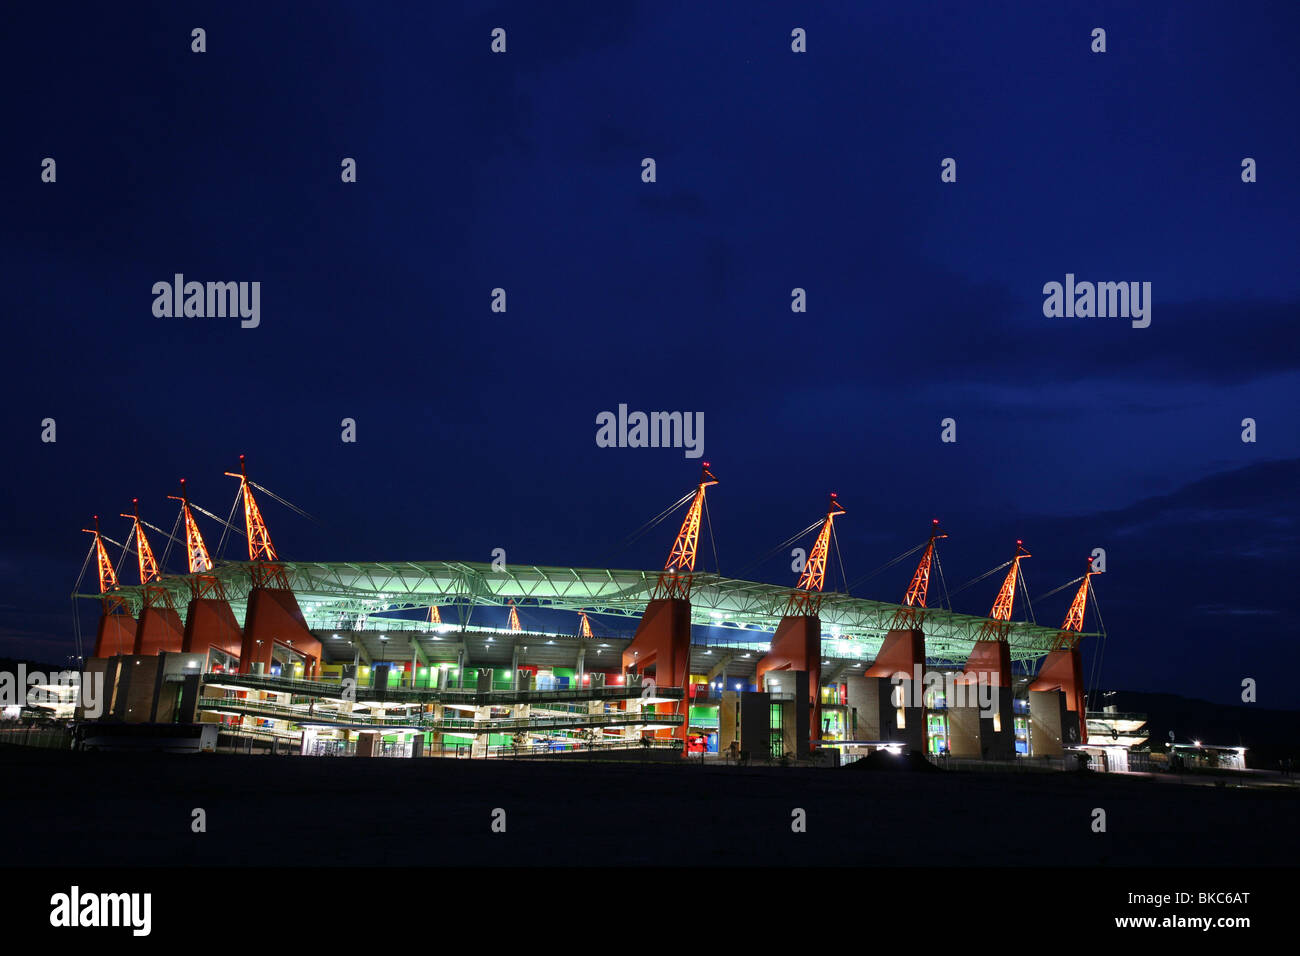 Mbombela stadium at night showing the giraffe-like structures holding up the roof Stock Photo